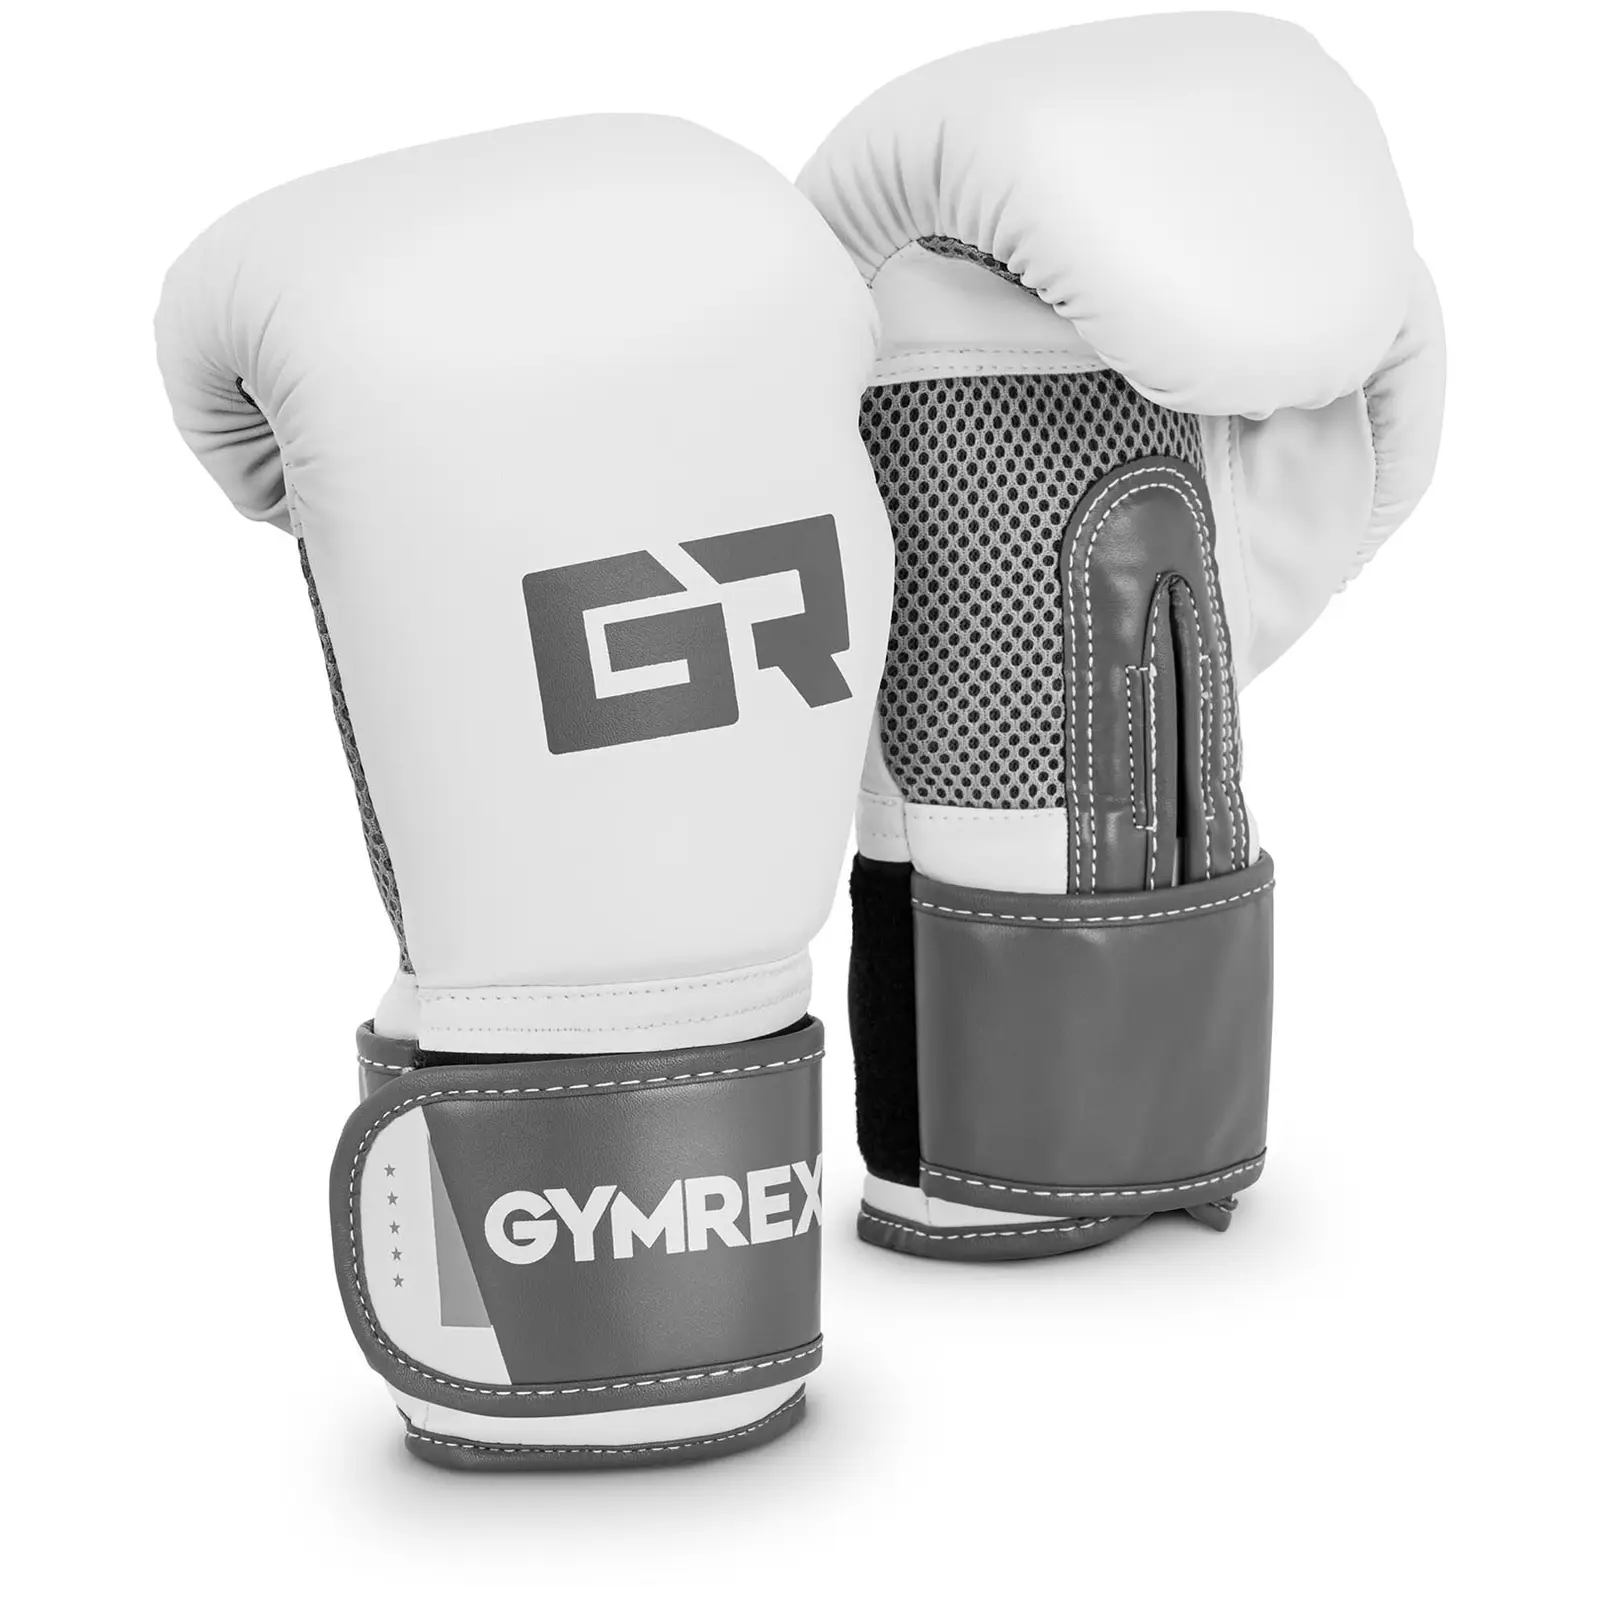 Boxing Gloves - 8 oz - interior mesh - white and light metallic grey